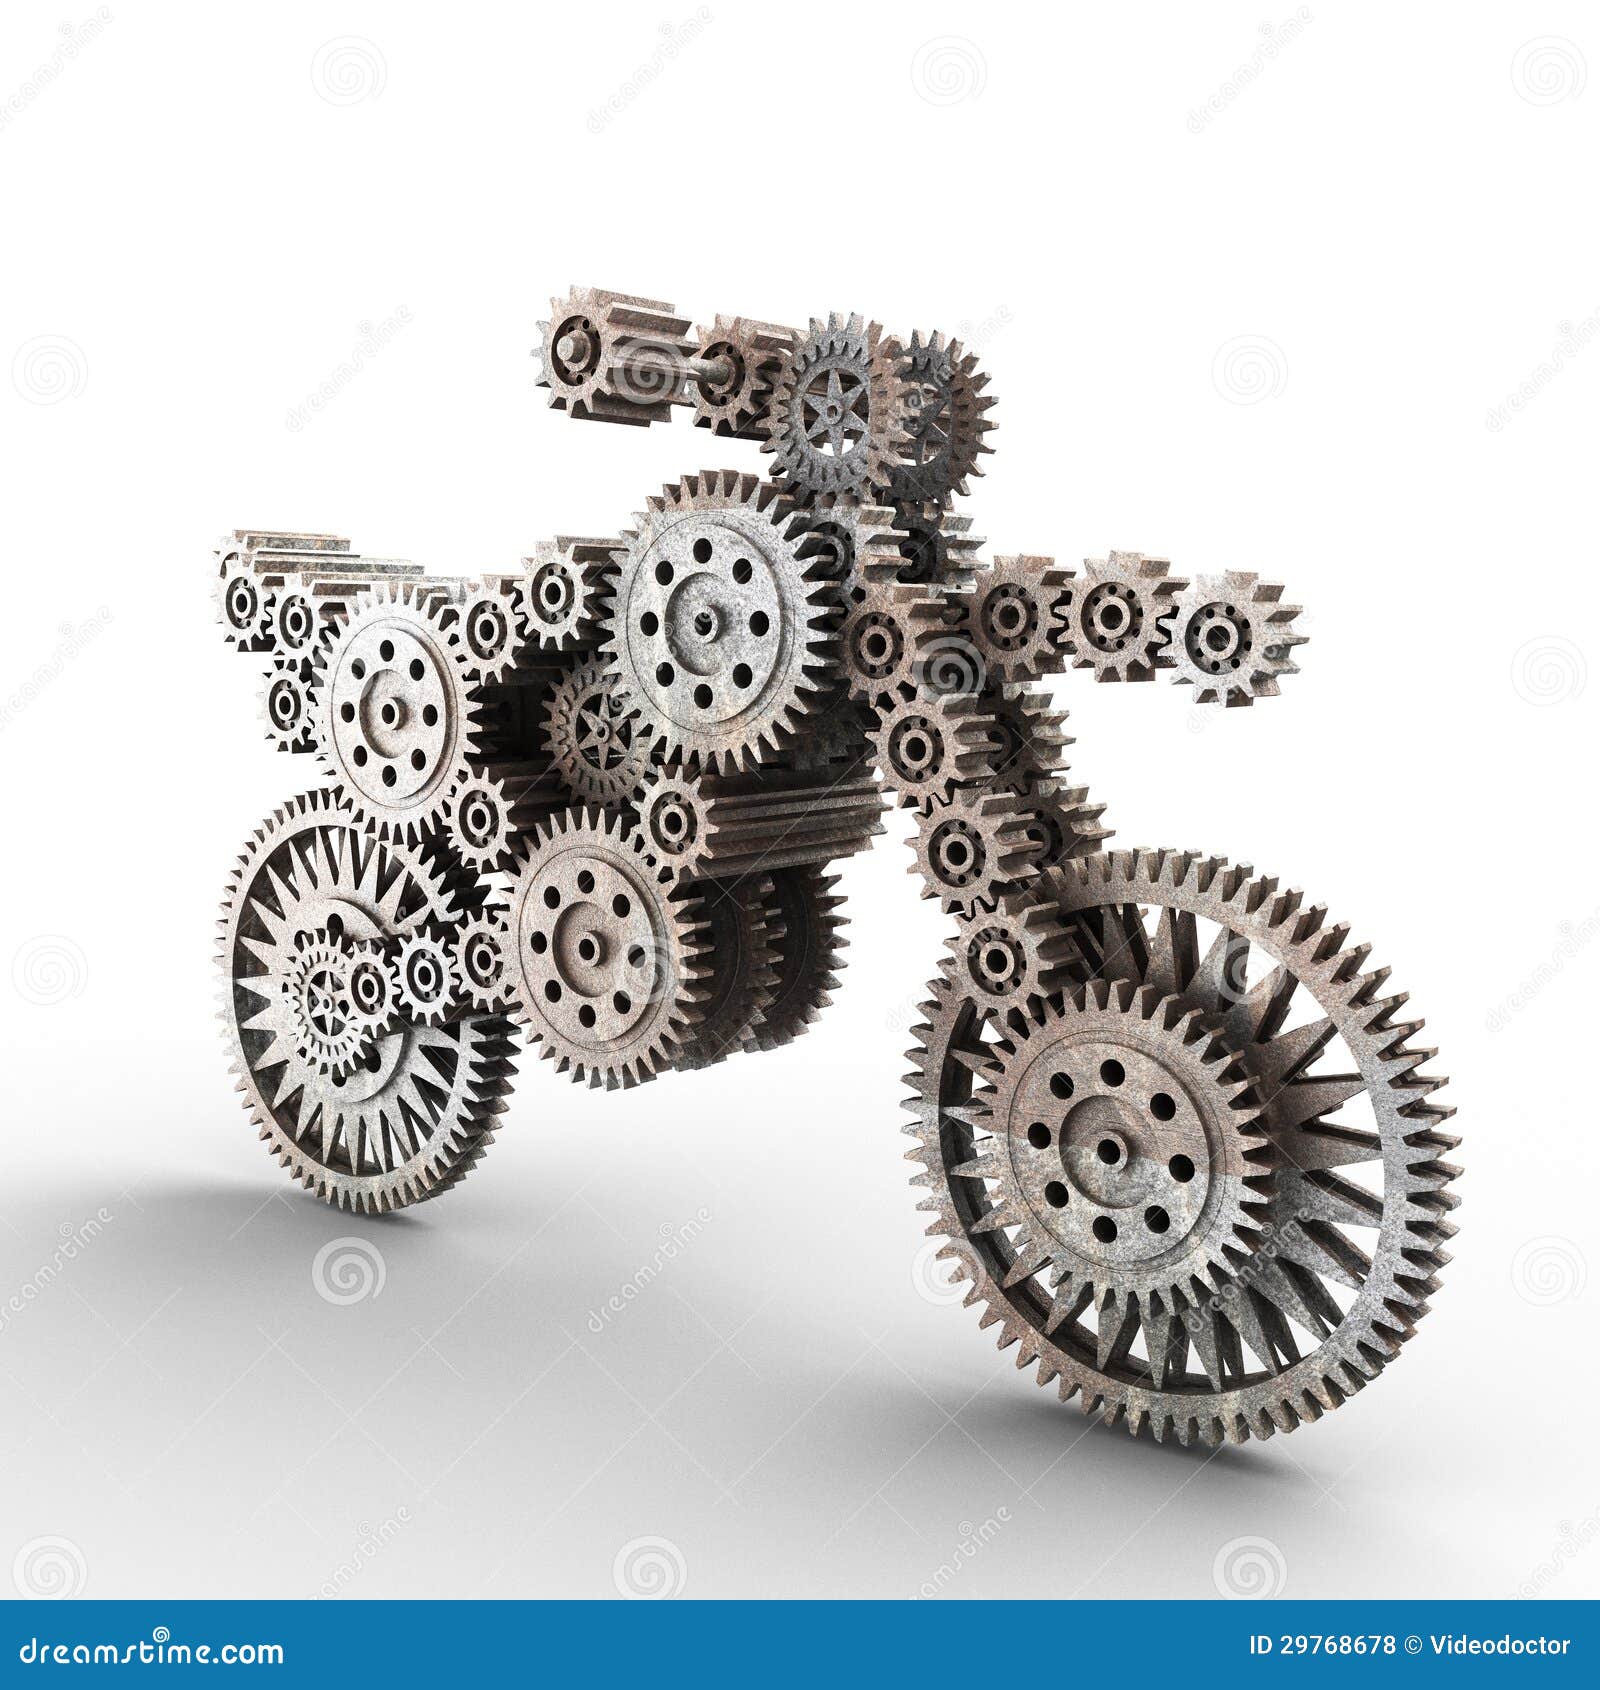 motobike made of gears